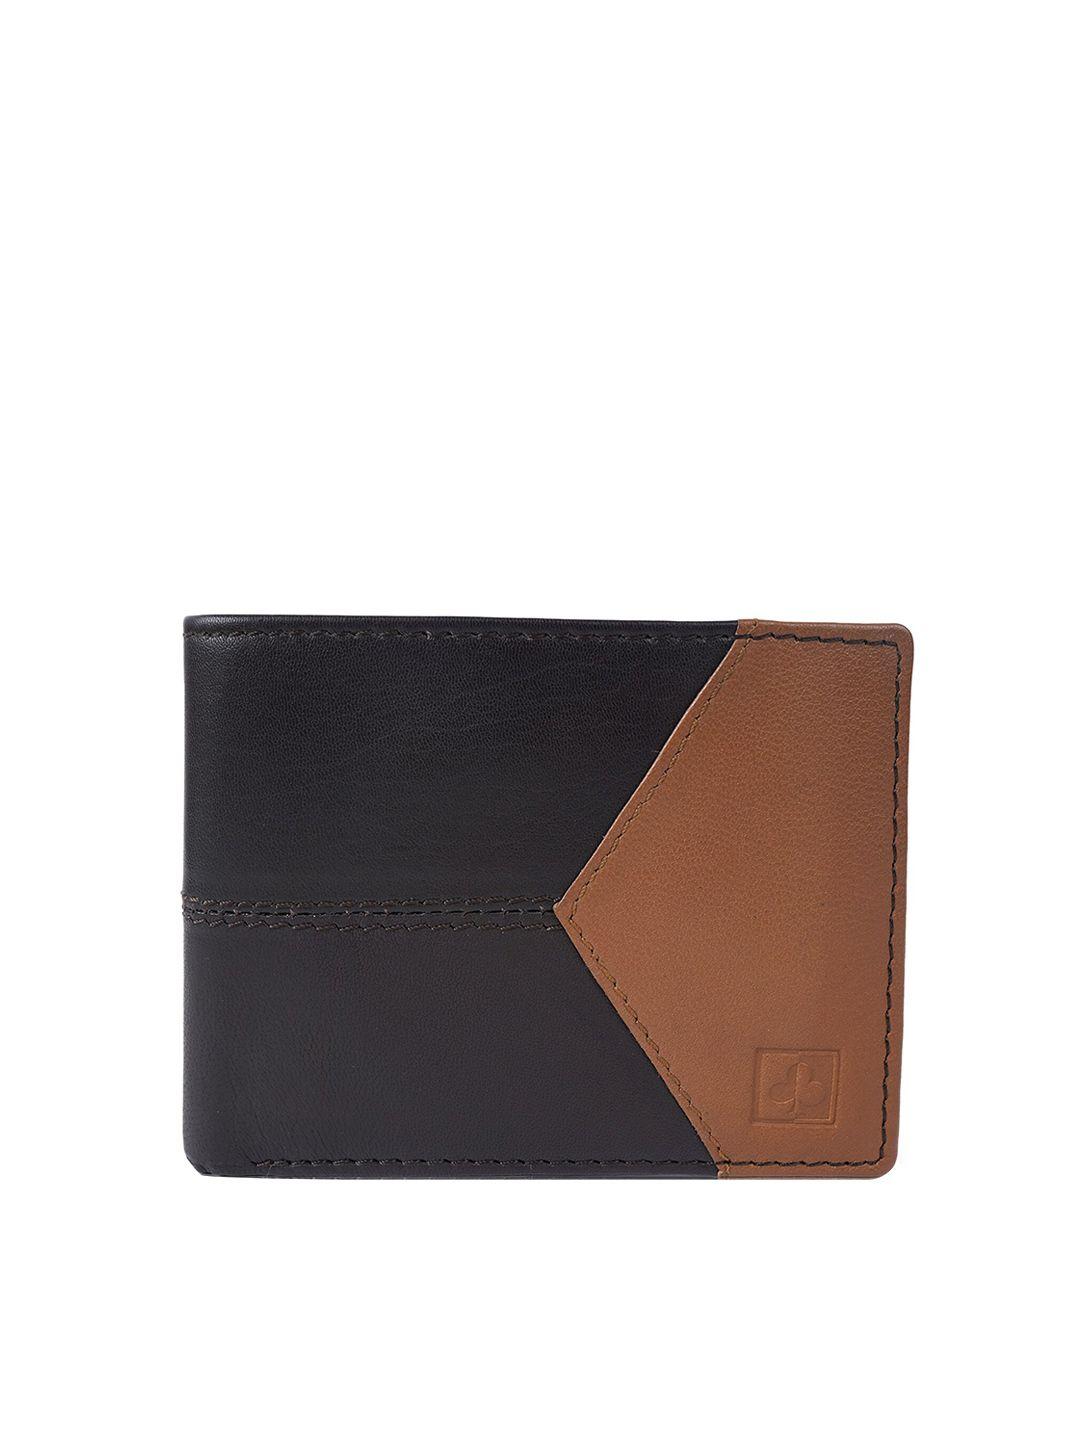 cimoni unisex black & brown colourblocked leather two fold wallet